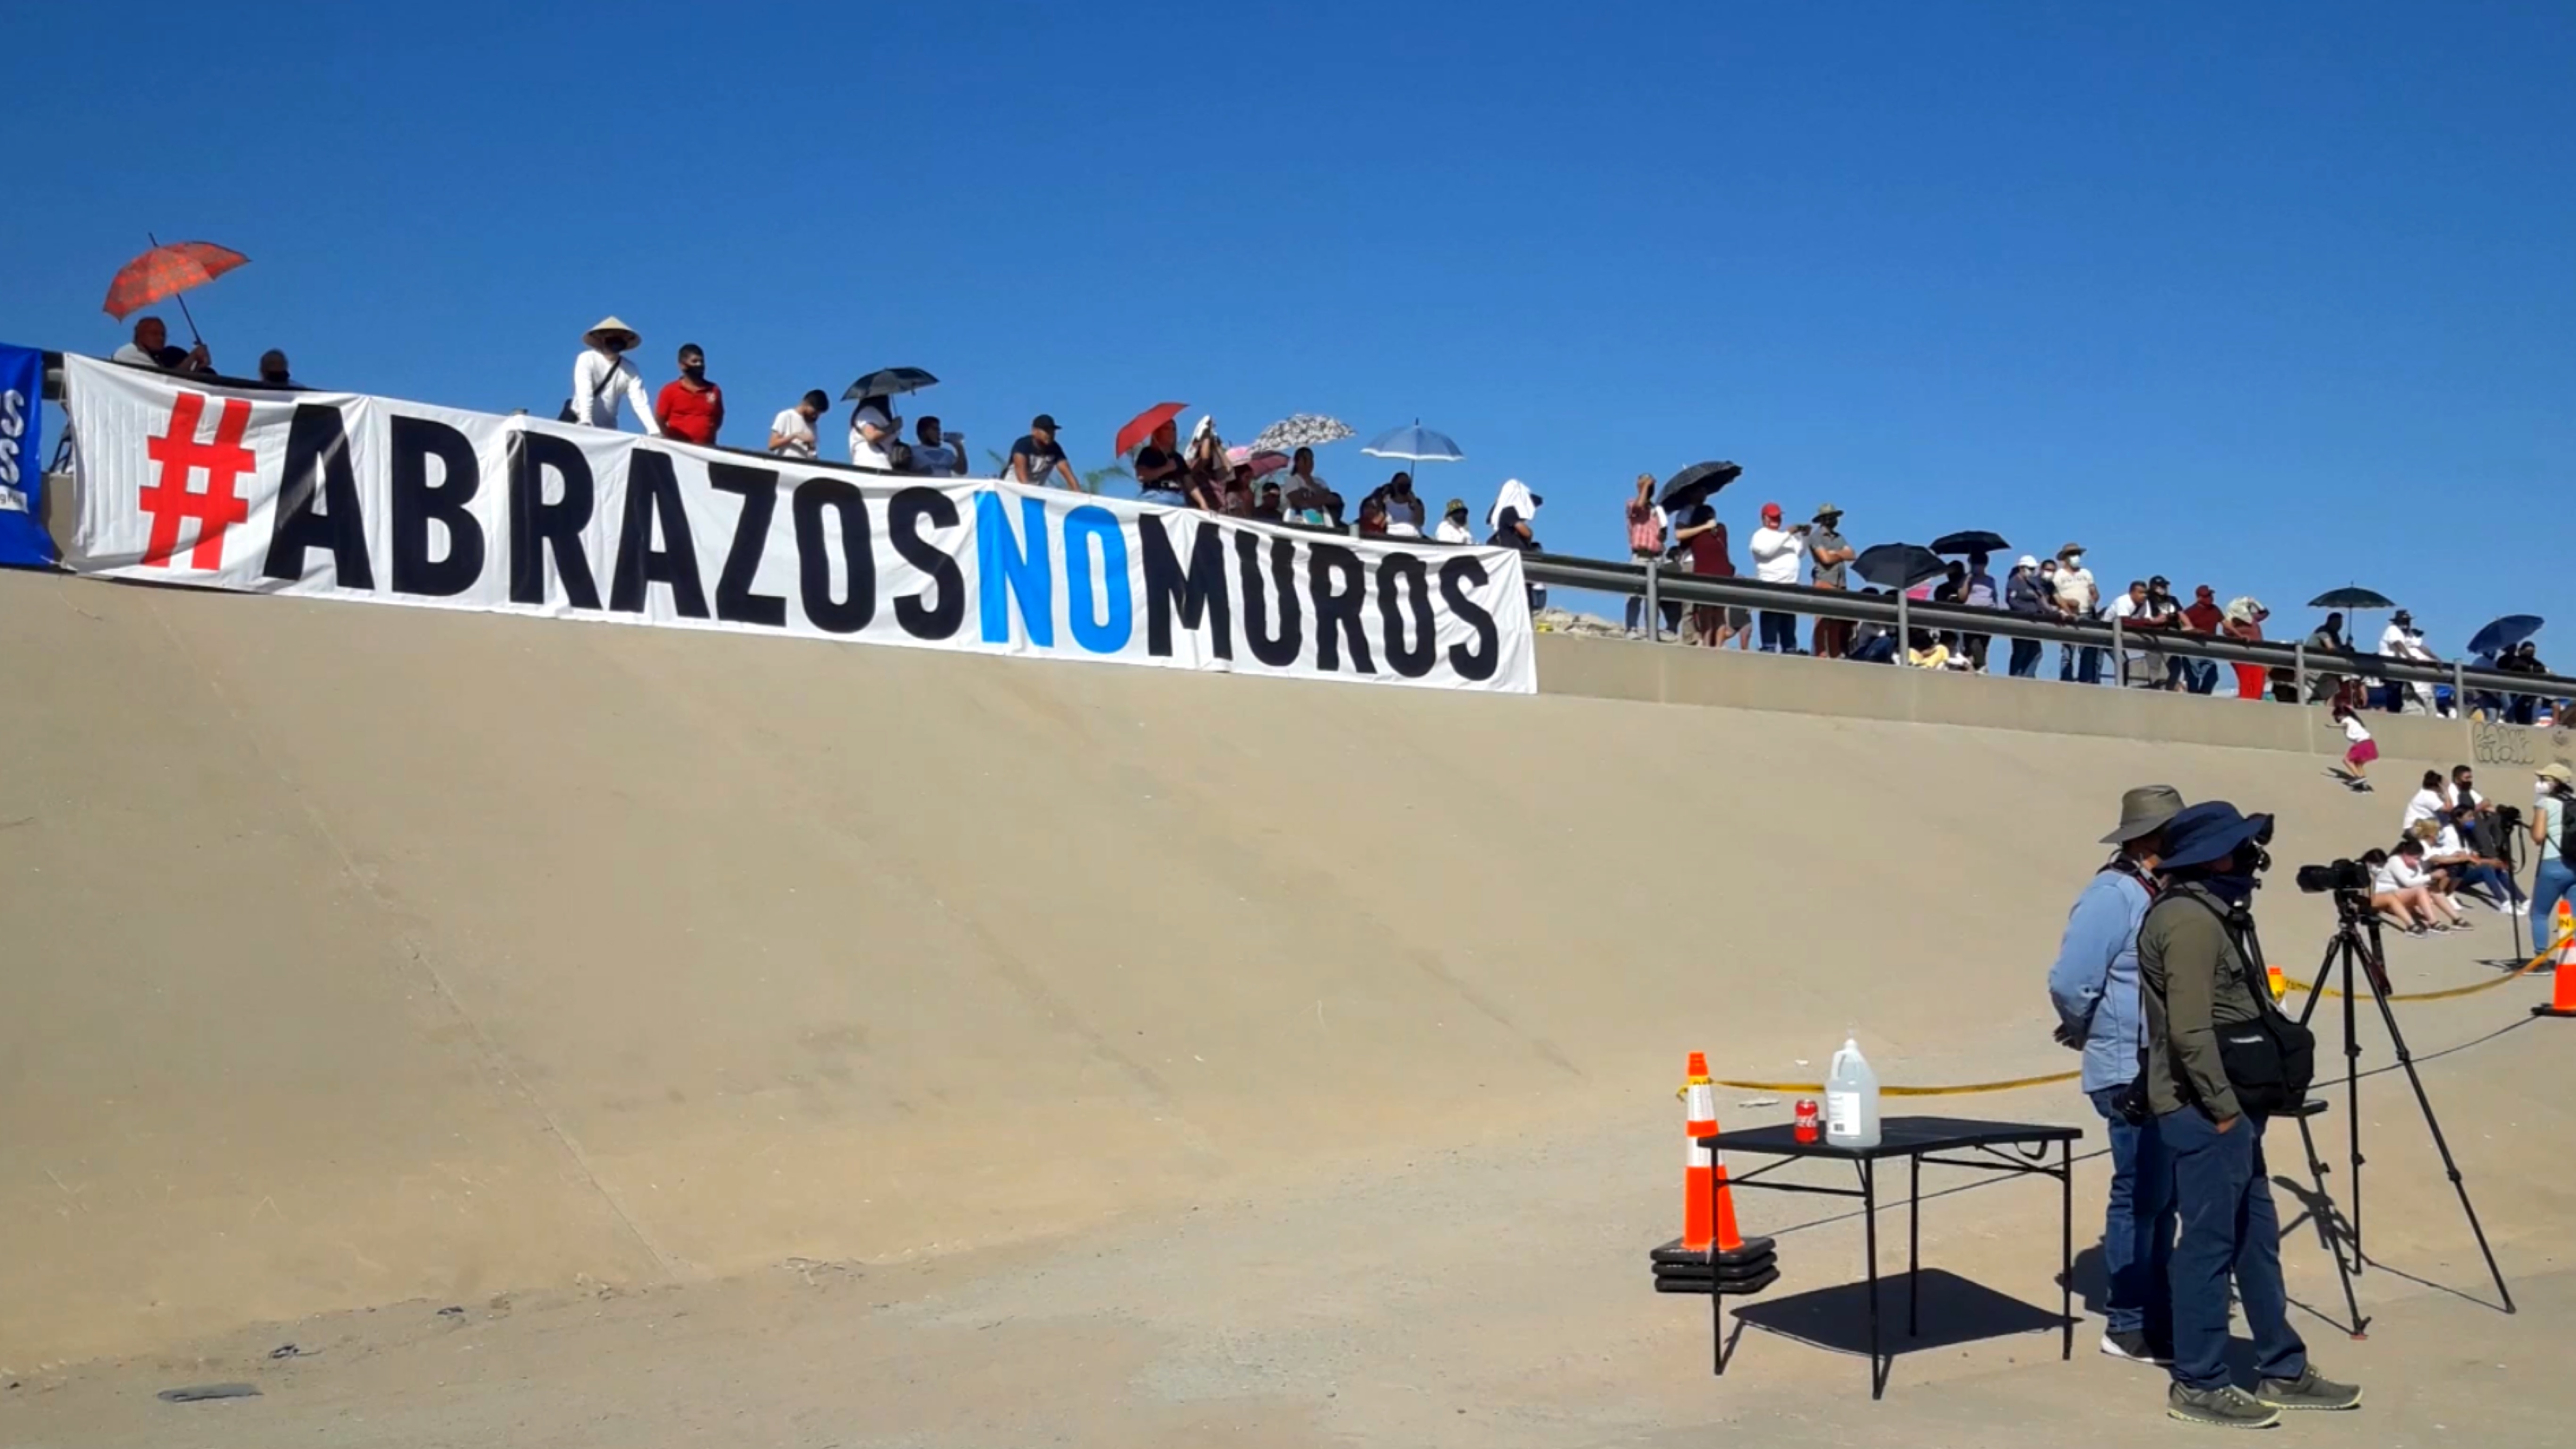 Abrazos-no-muros-hugs-not-walls-Jorge-Romero-camarografo